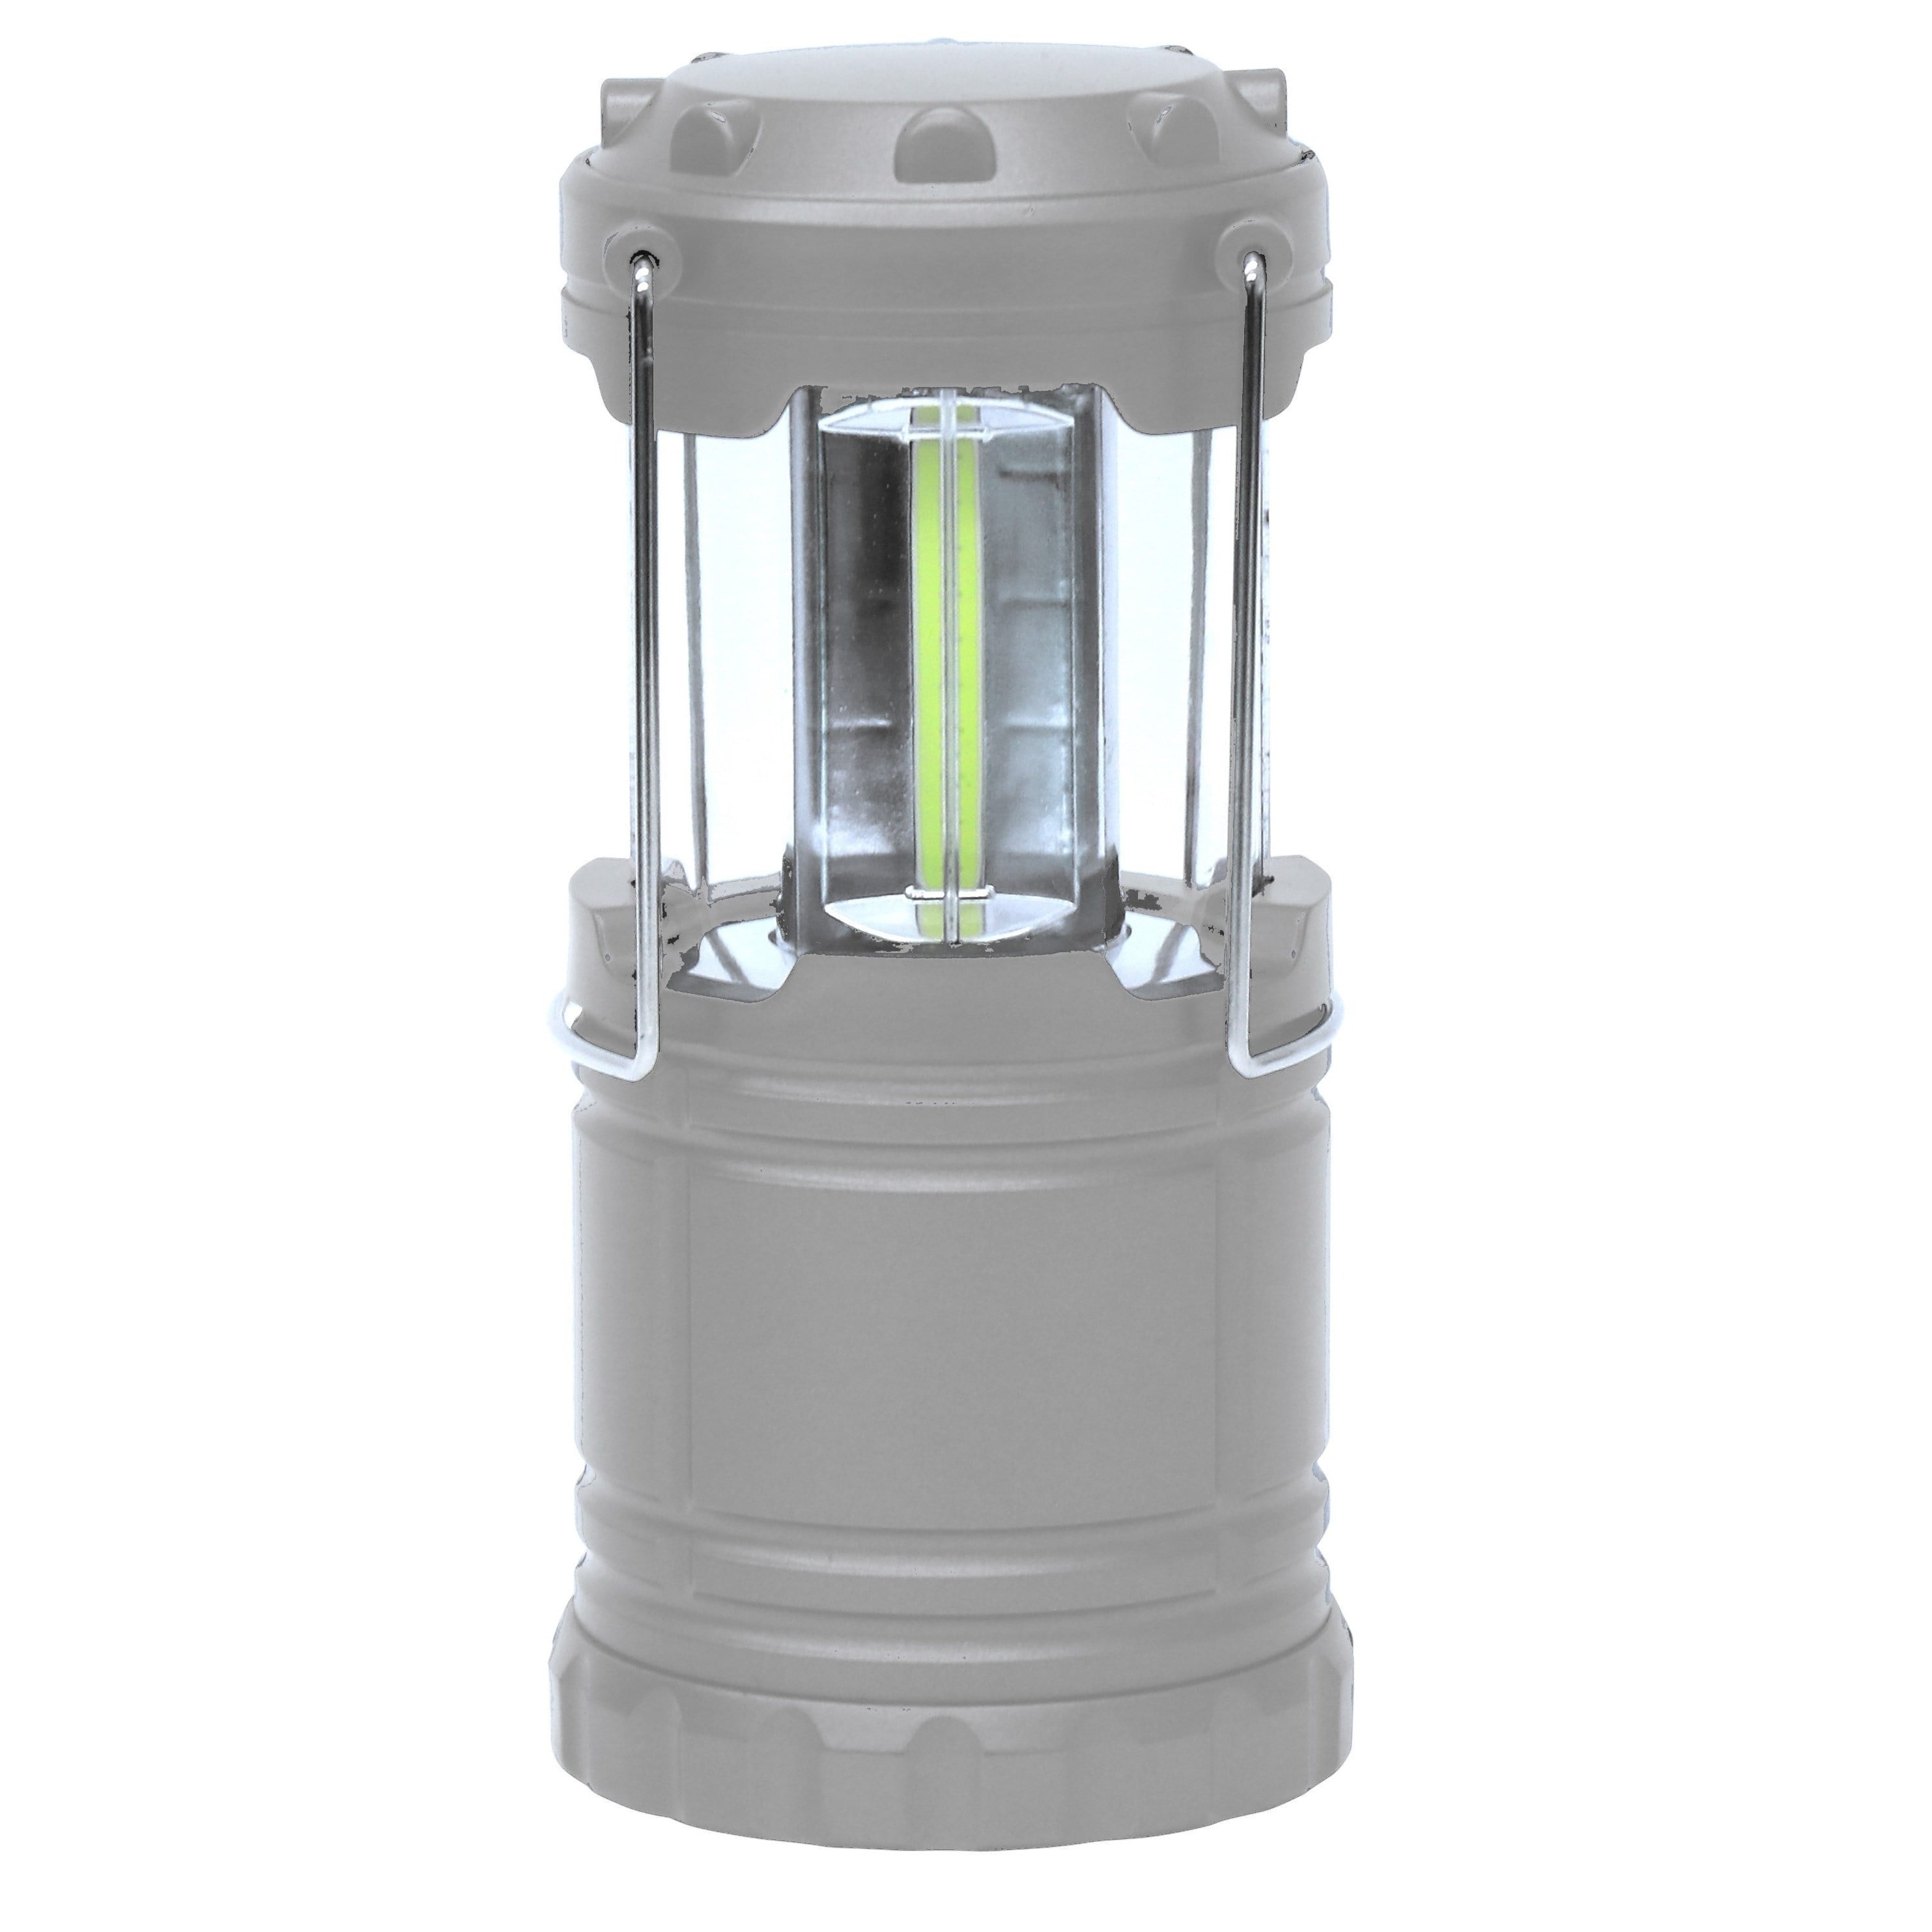 Bell + Howell Taclight LED Lantern - Purple